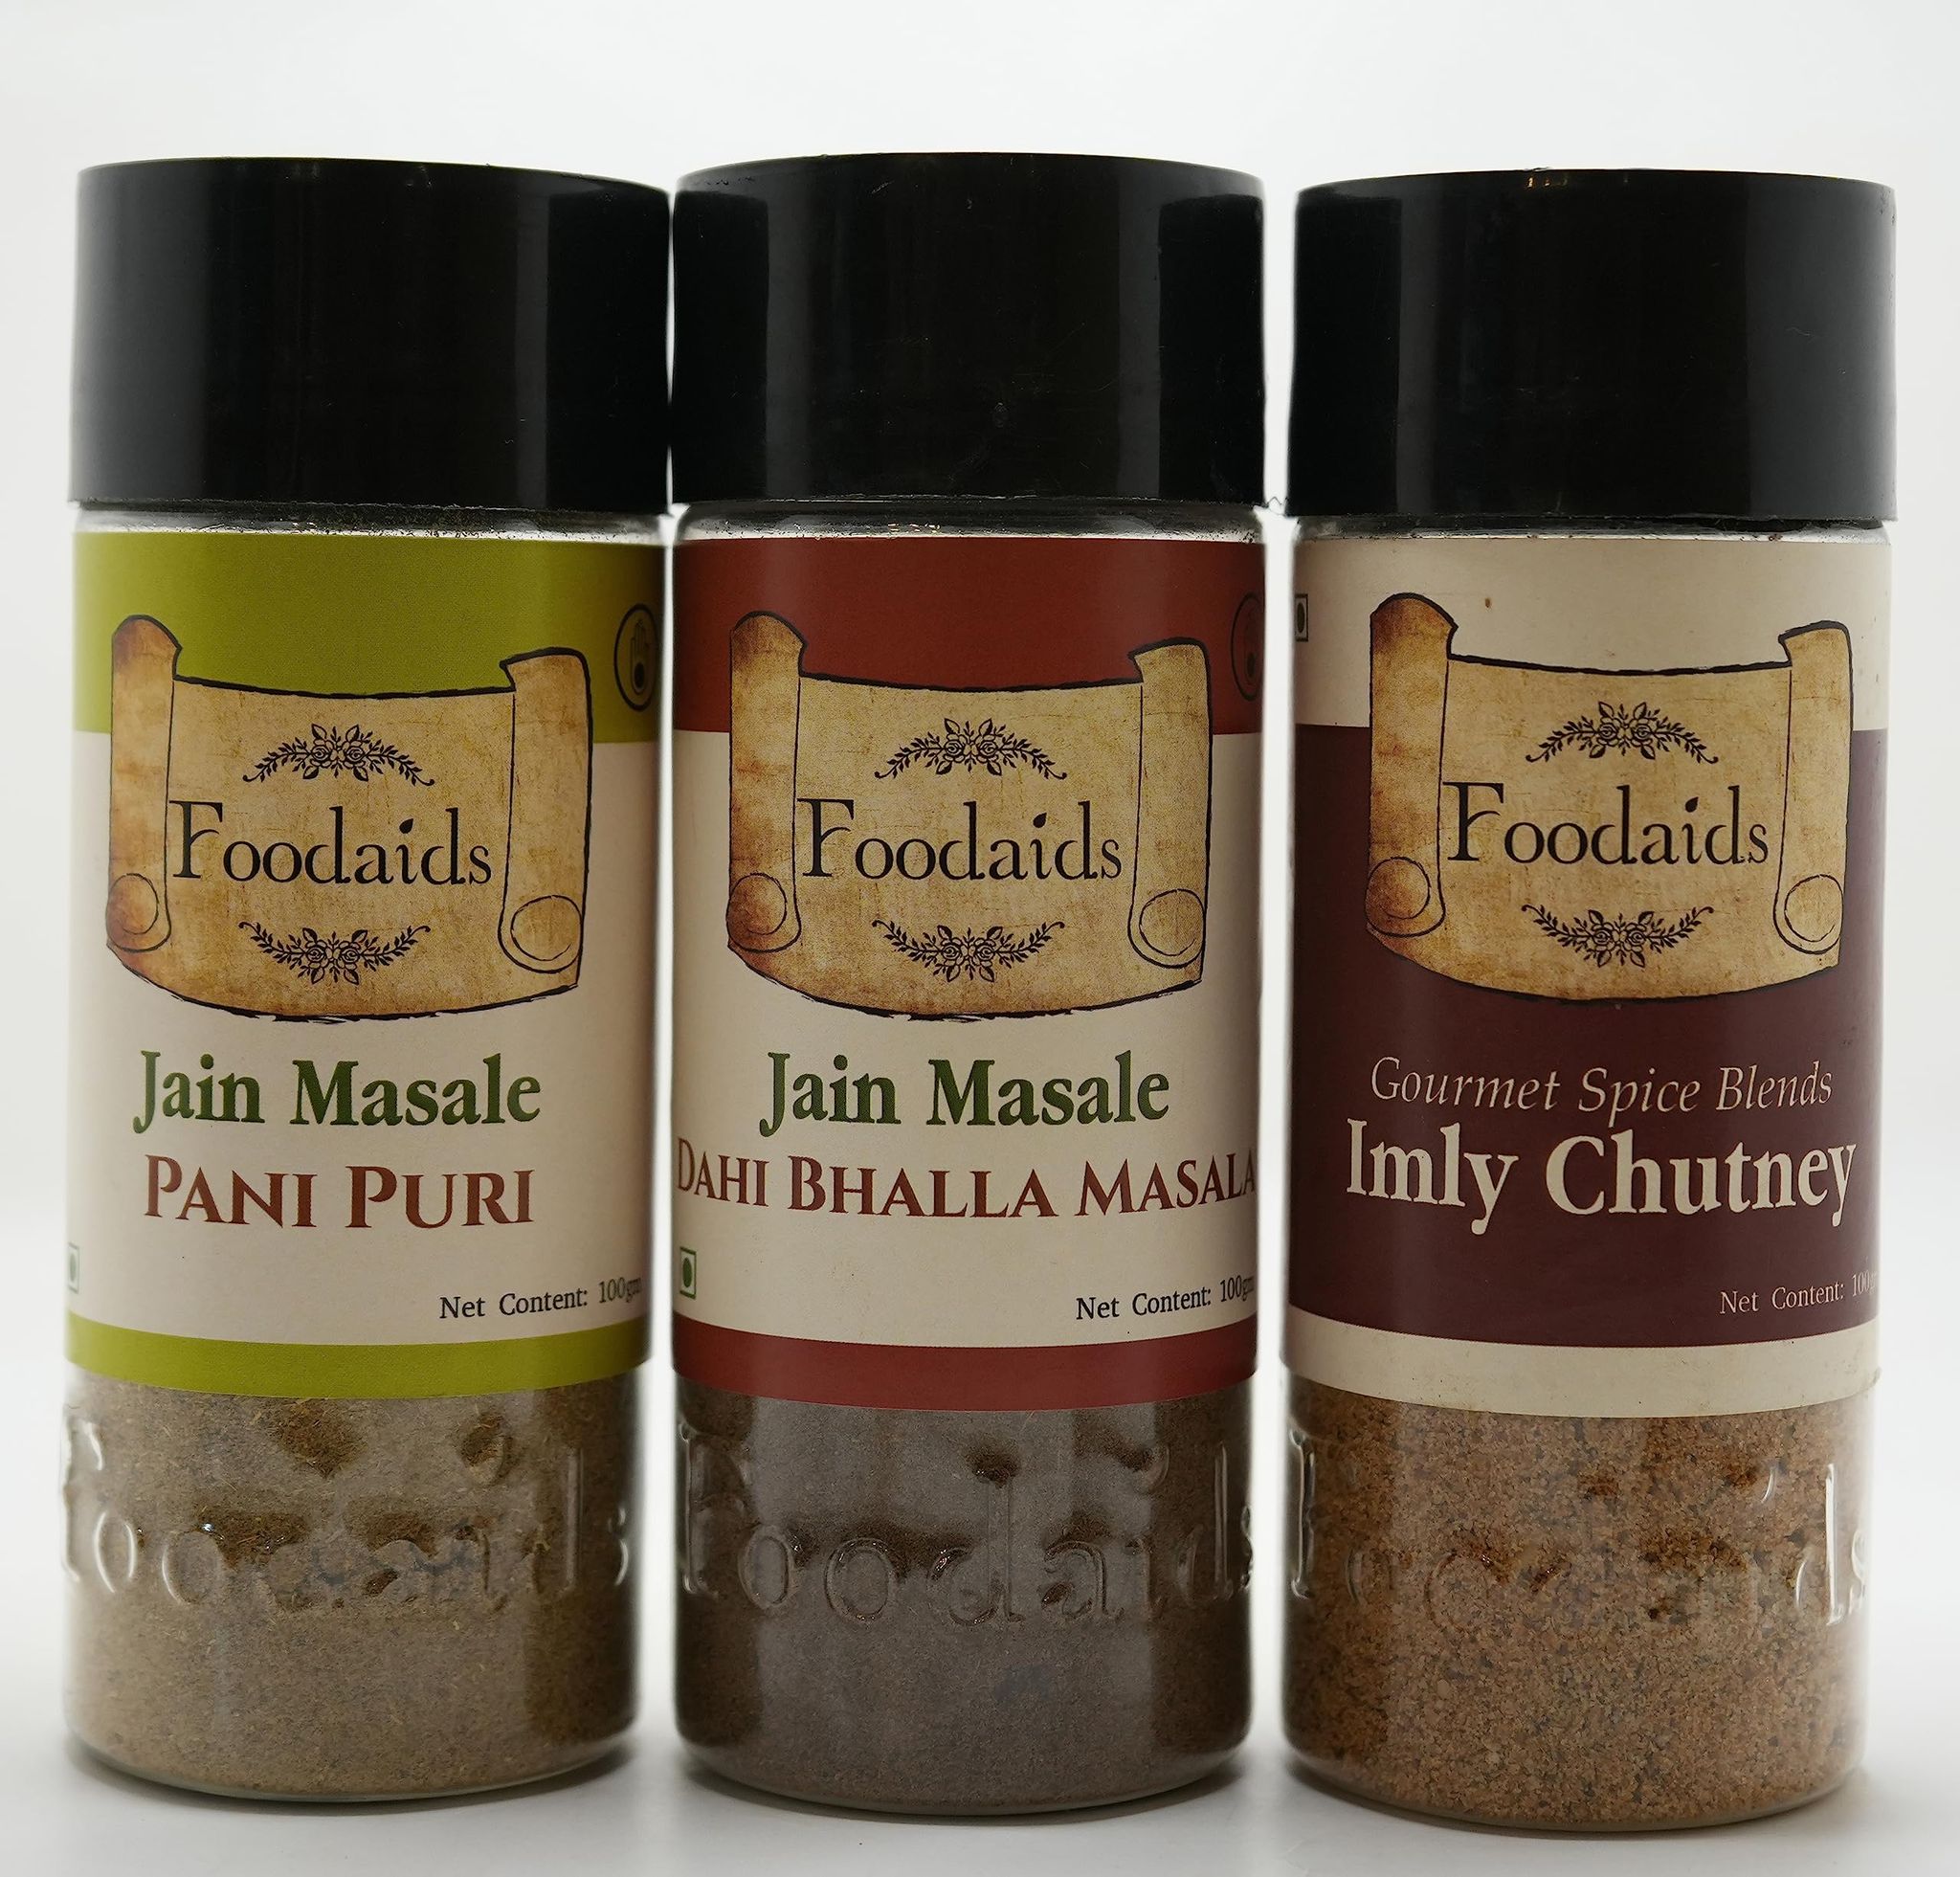 Foodaids Chaat Masala Combo - Pani Puri, Dahi Bhalla Masala, Imly Chutney Masala - Pack of 3 (100 Gm Each)